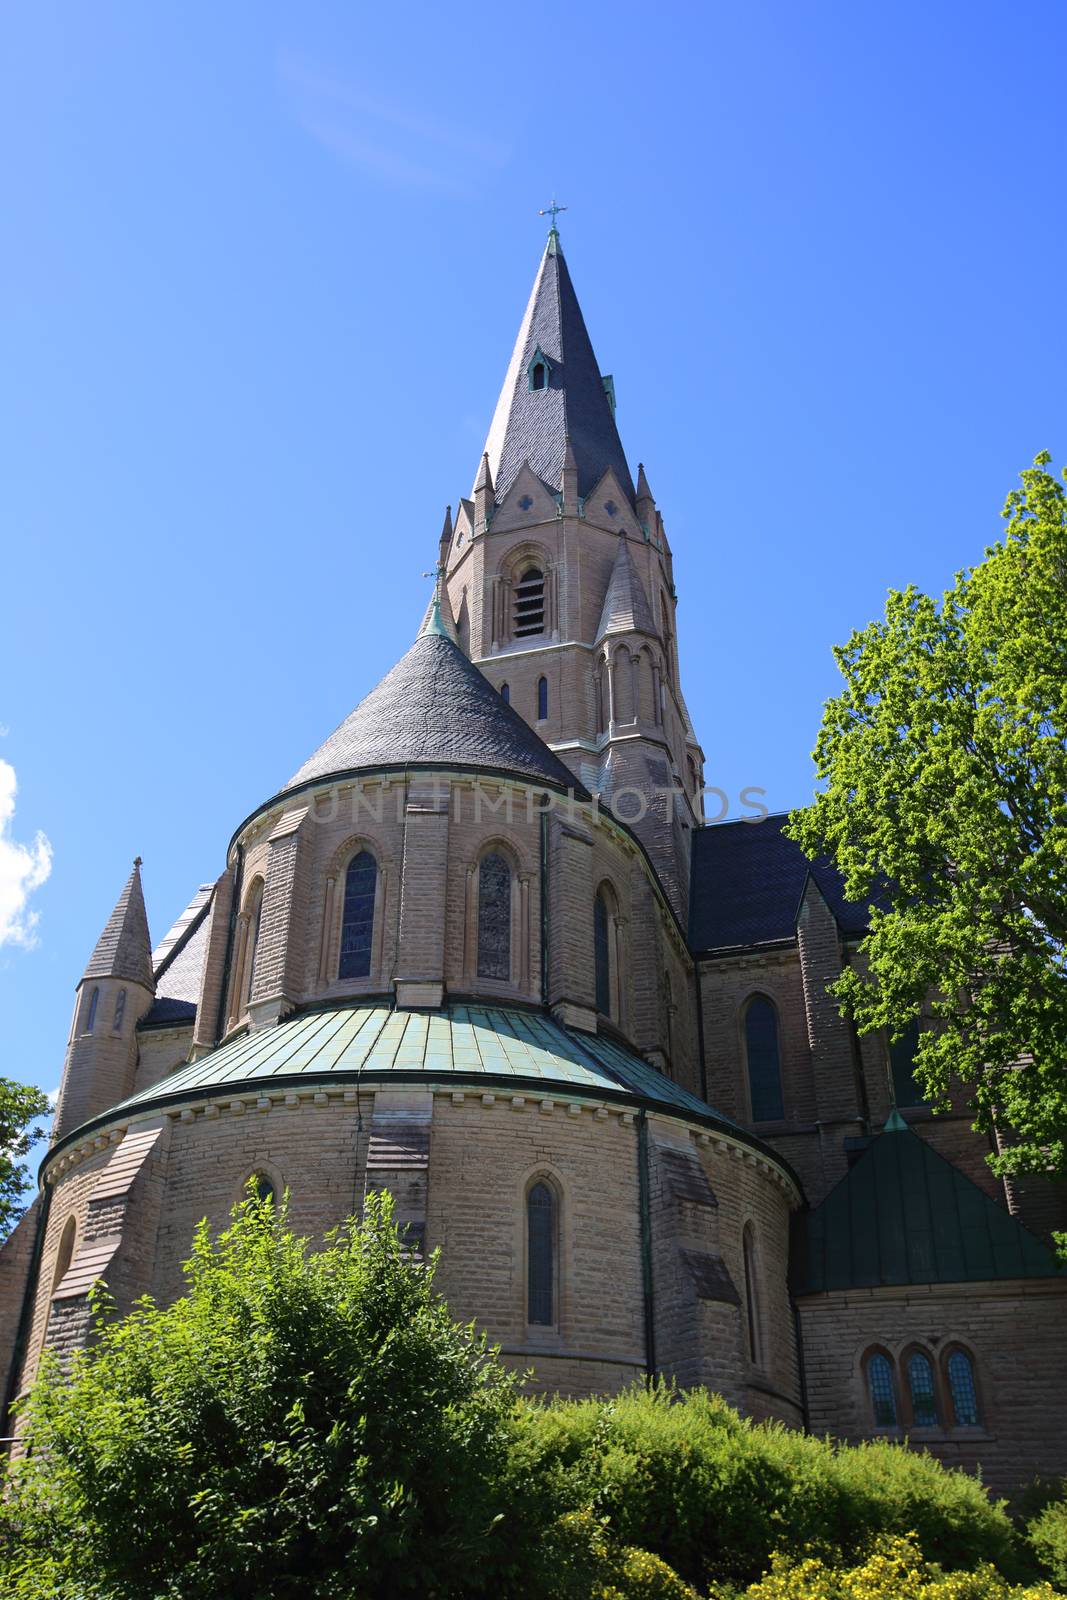 Saint Nicholas Church, Orebro, Sweden at summer day